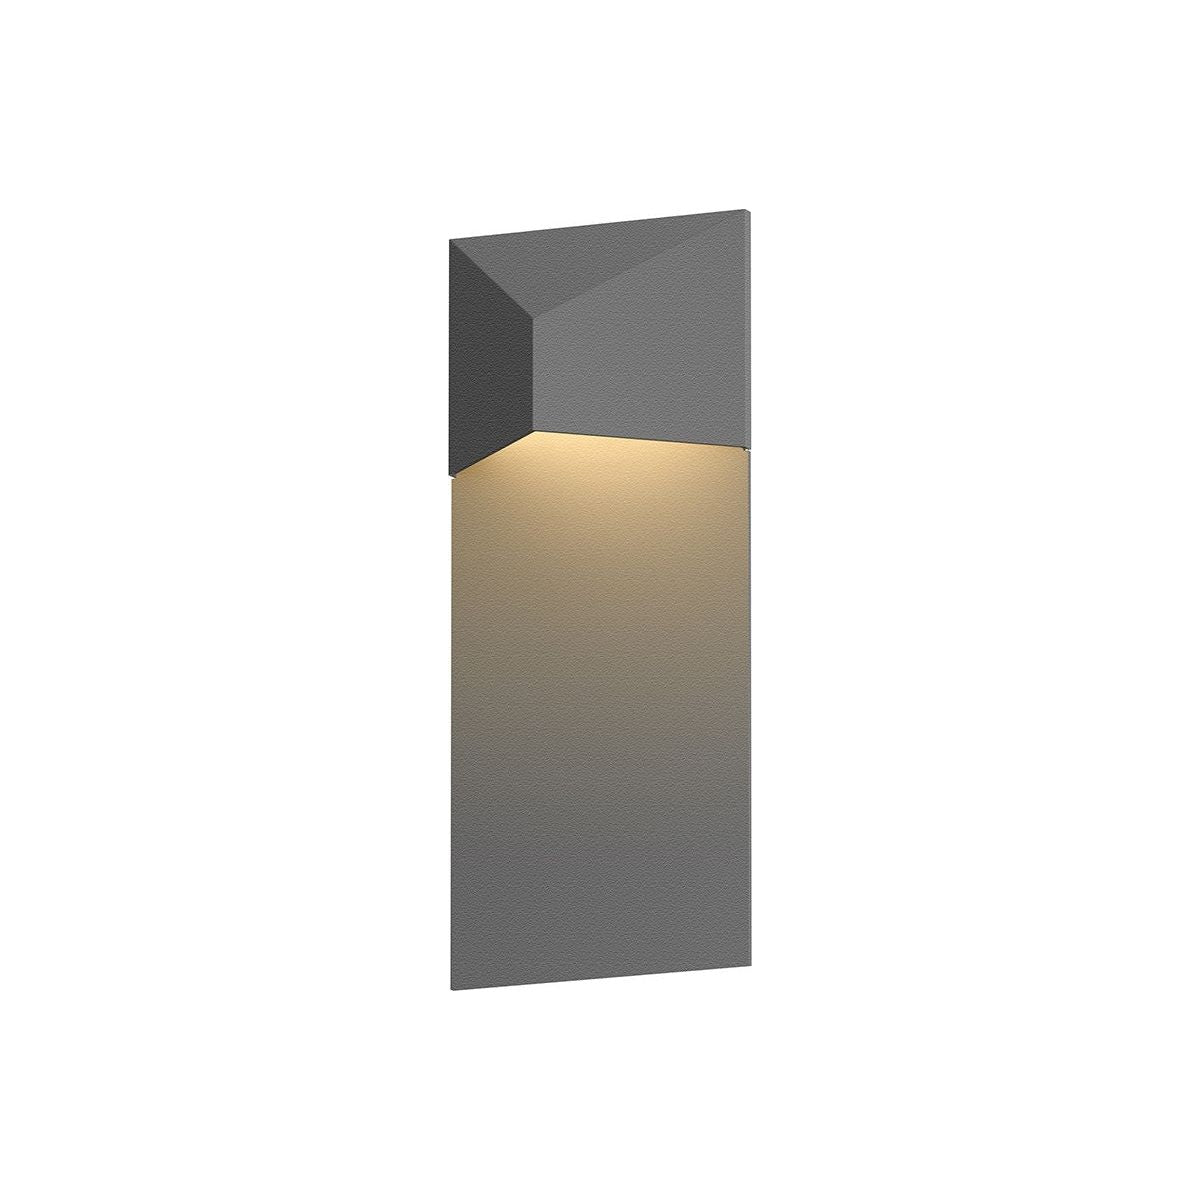 Triform Panel LED Sconce